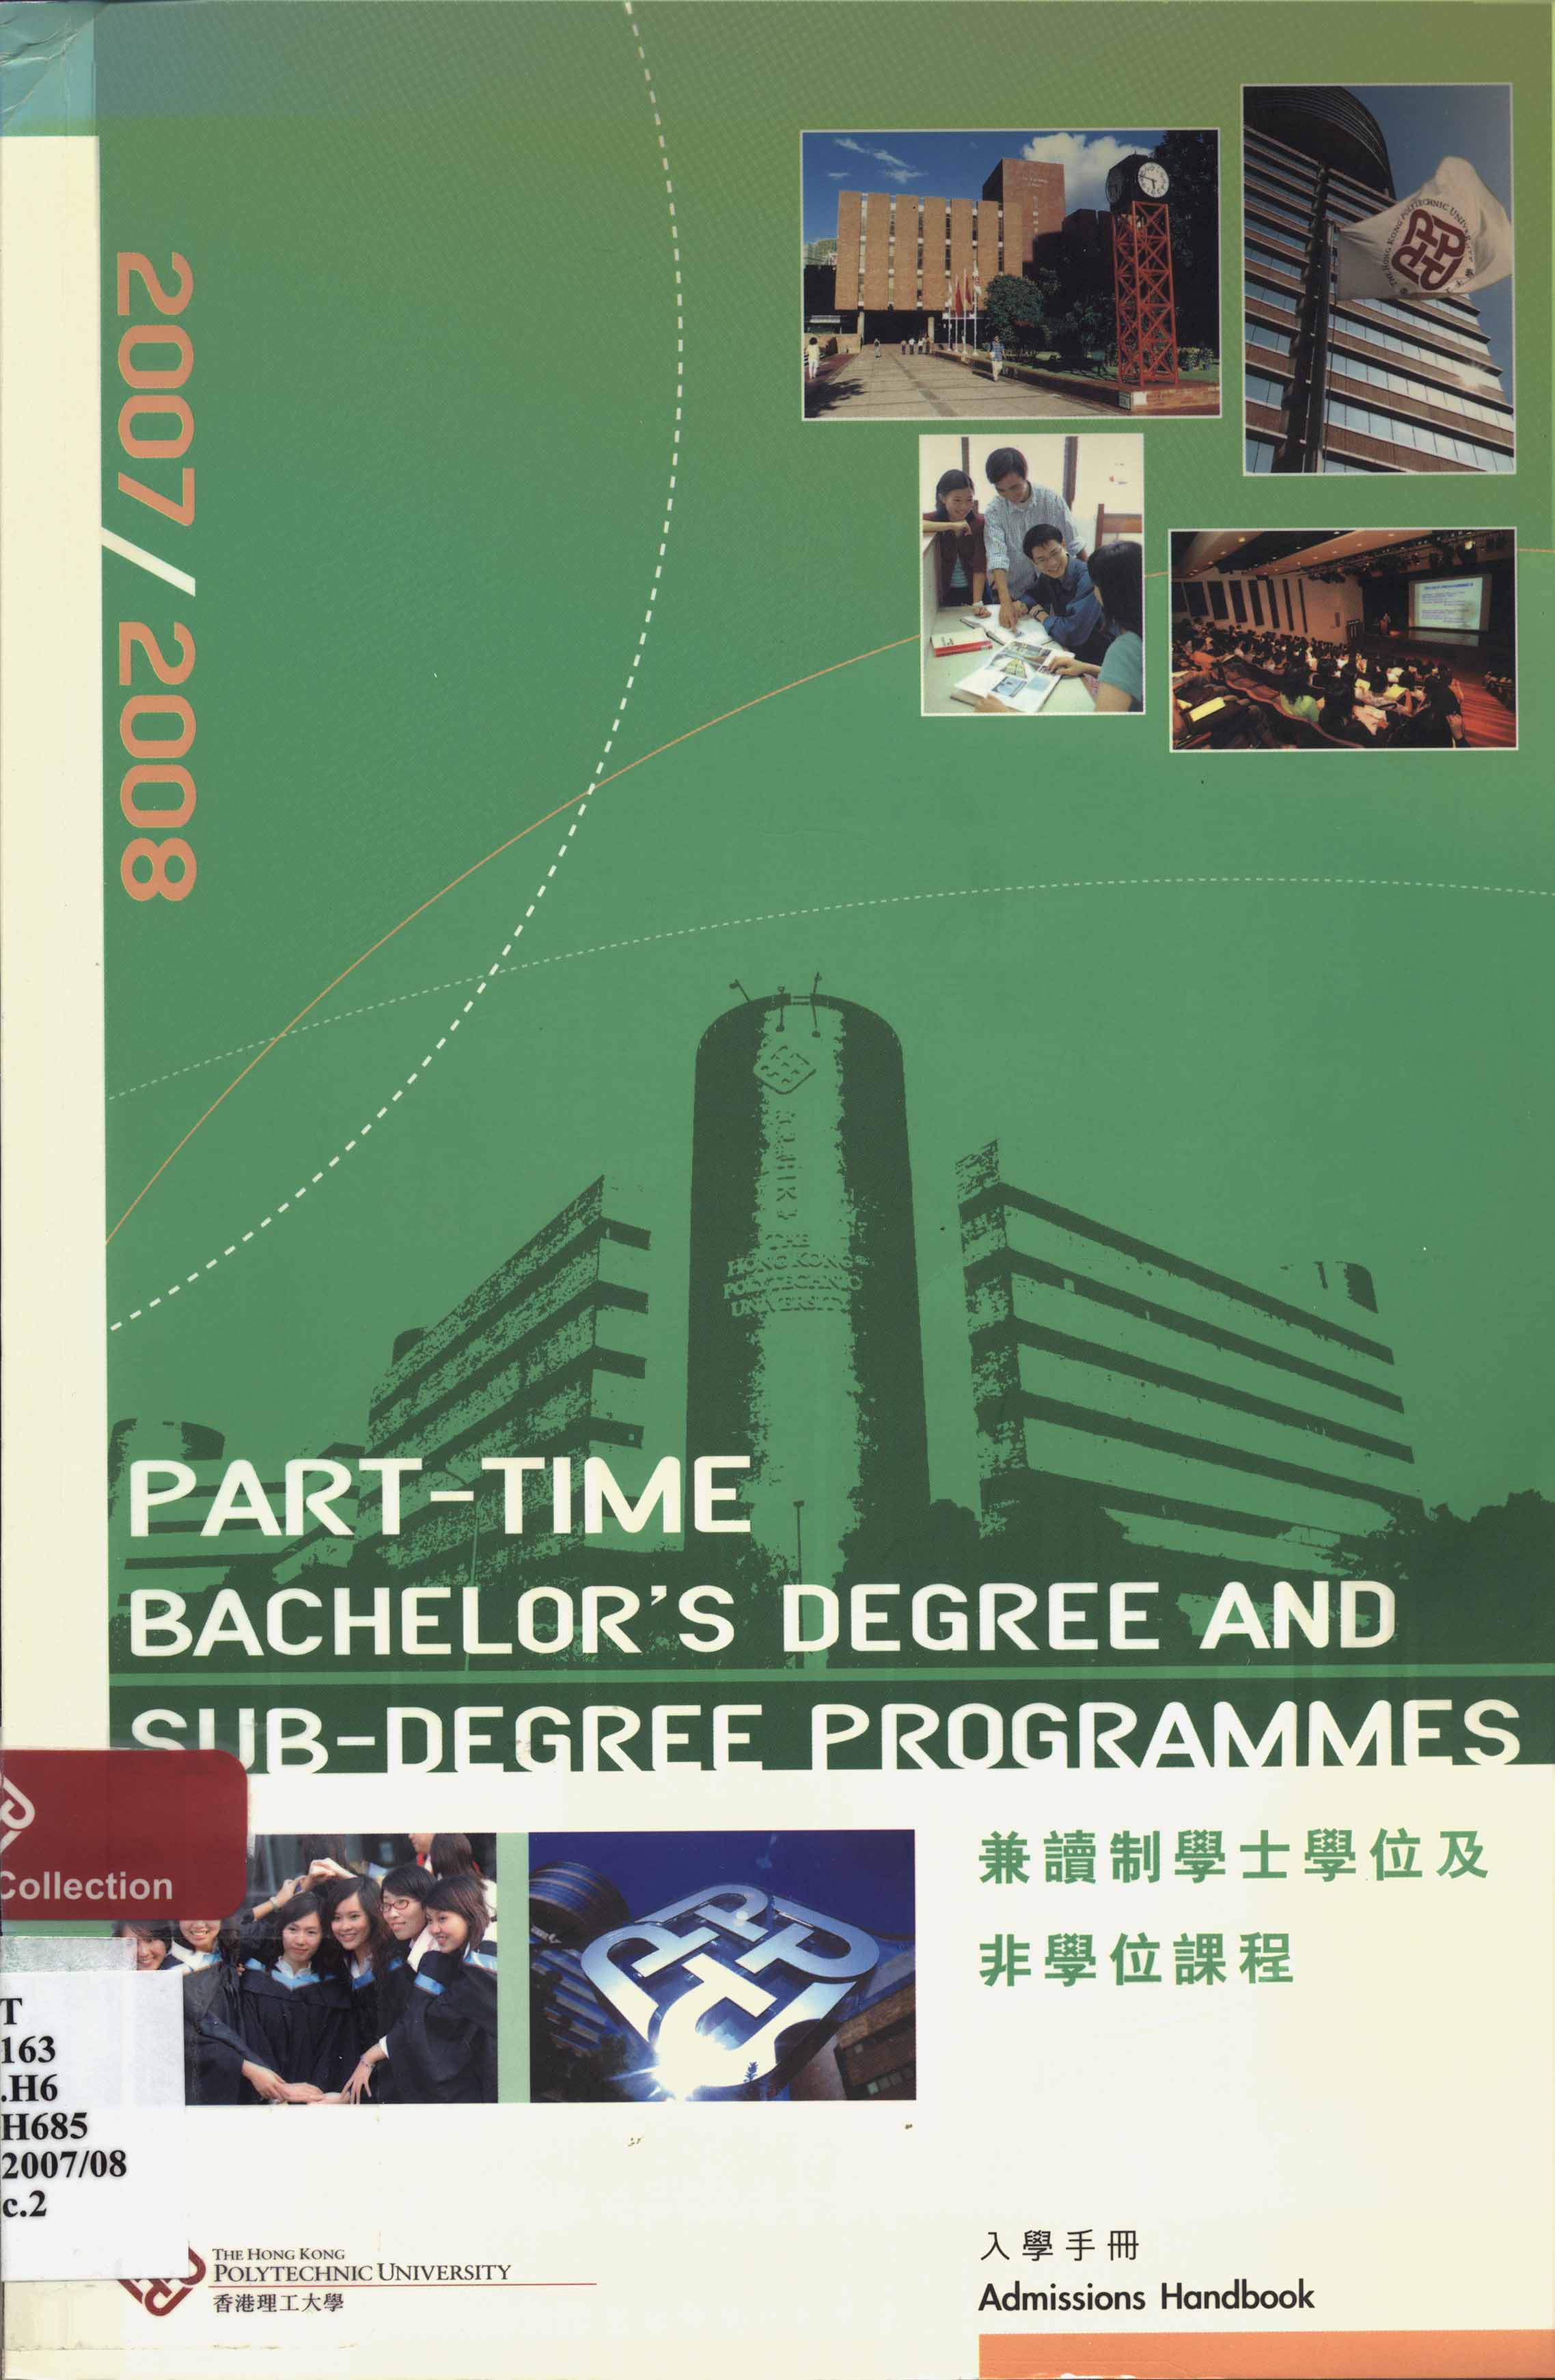 Hong Kong Polytechnic University. Prospectus. Part-time bachelor's degree and sub-degree programmes 2007/08